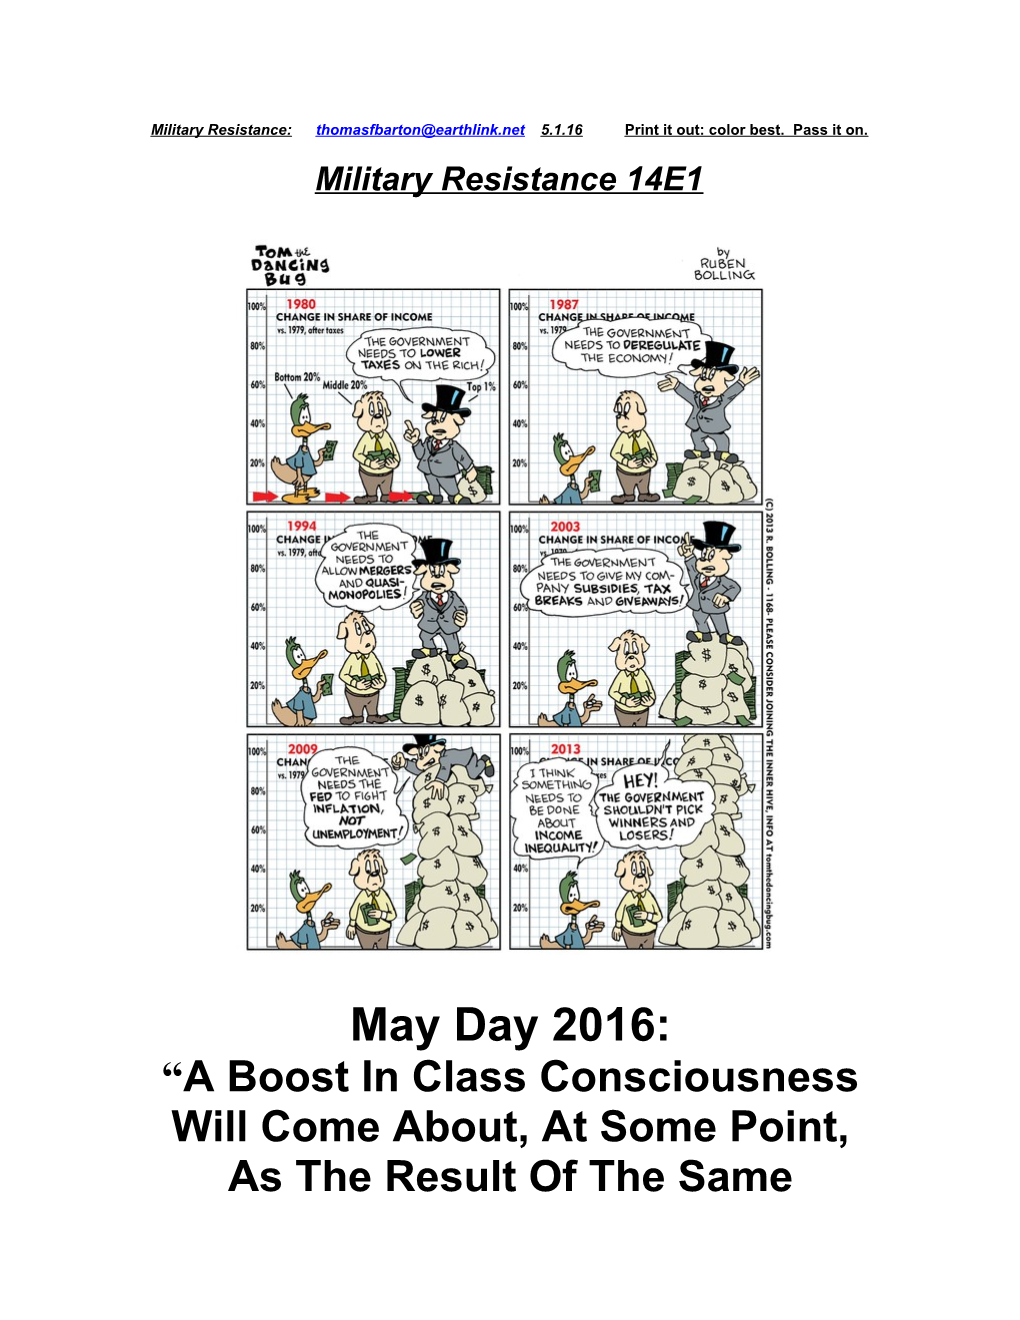 Military Resistance 14E1